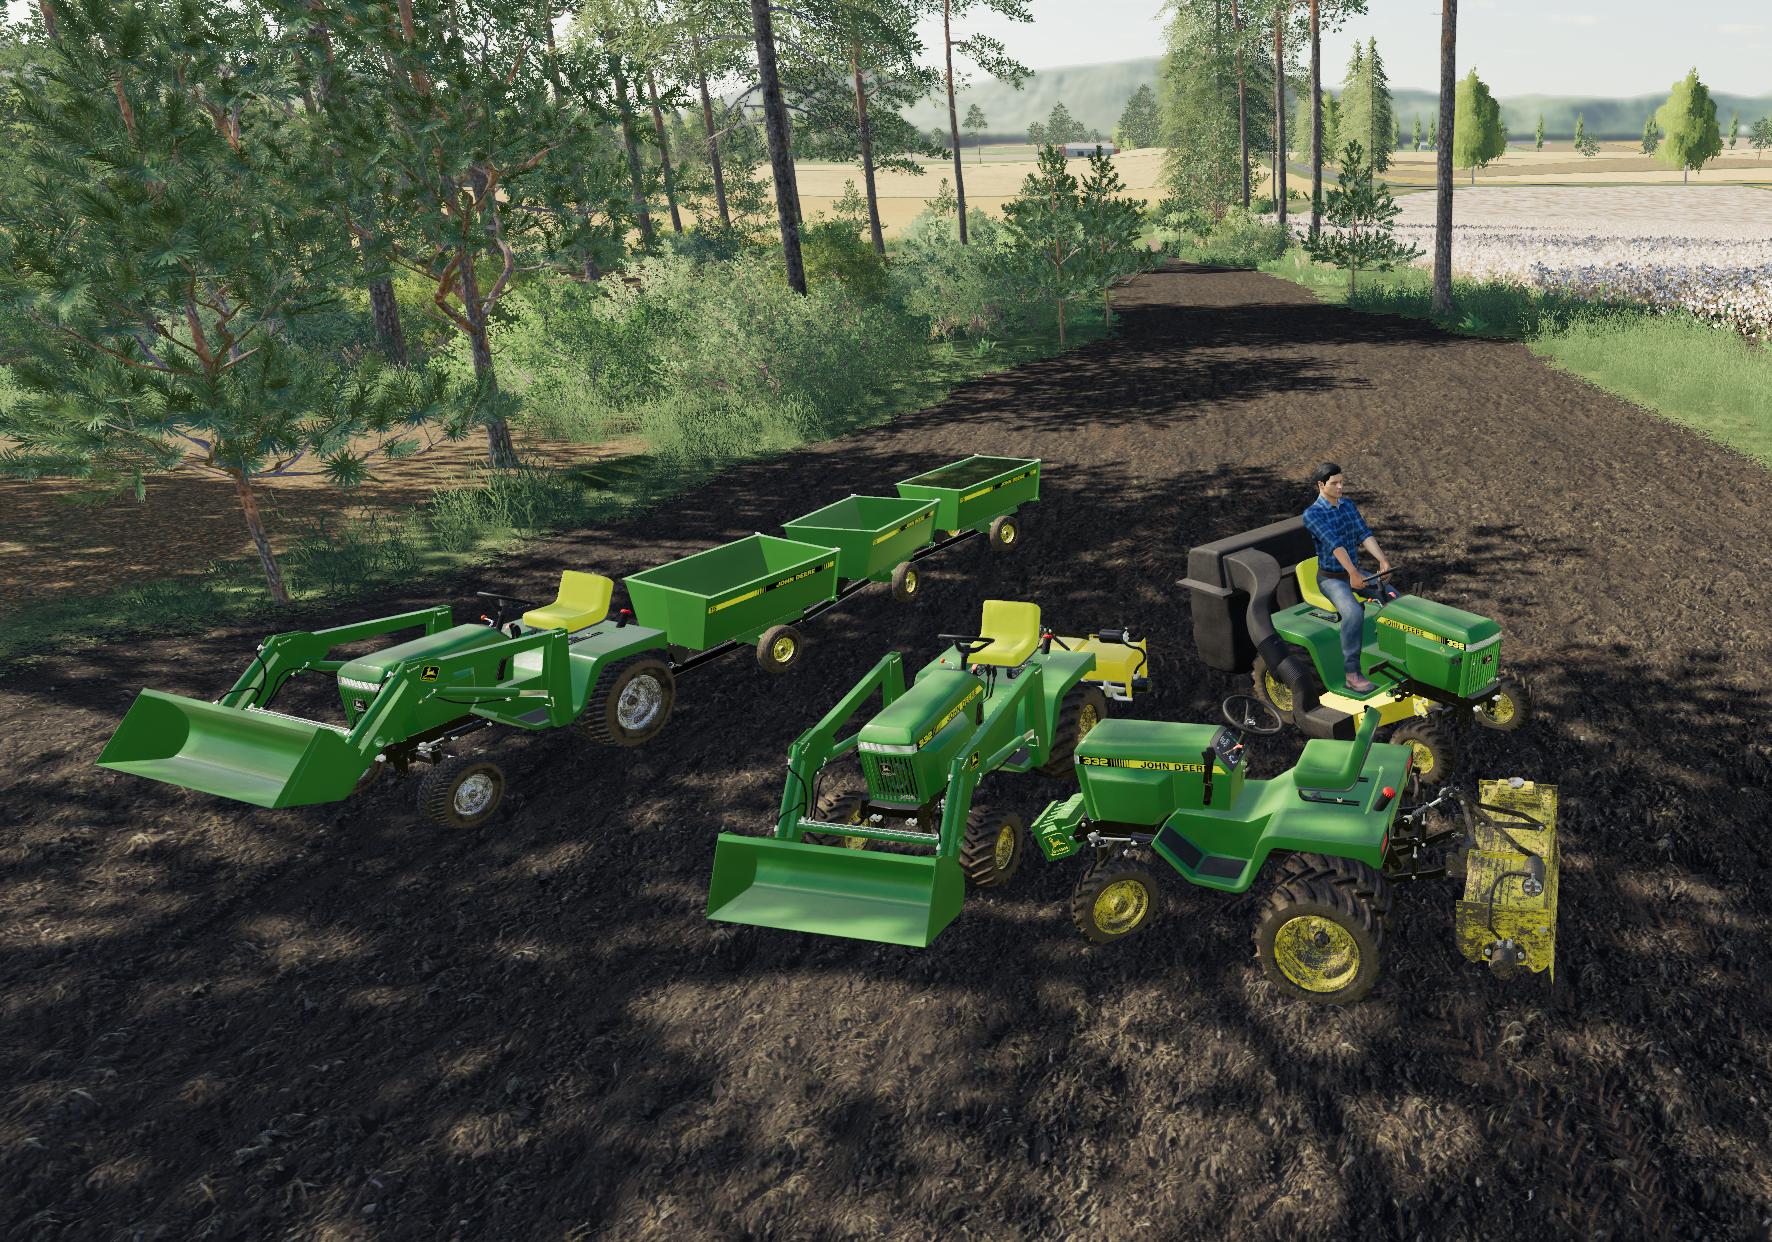 john deere tractors on farming simulator 19